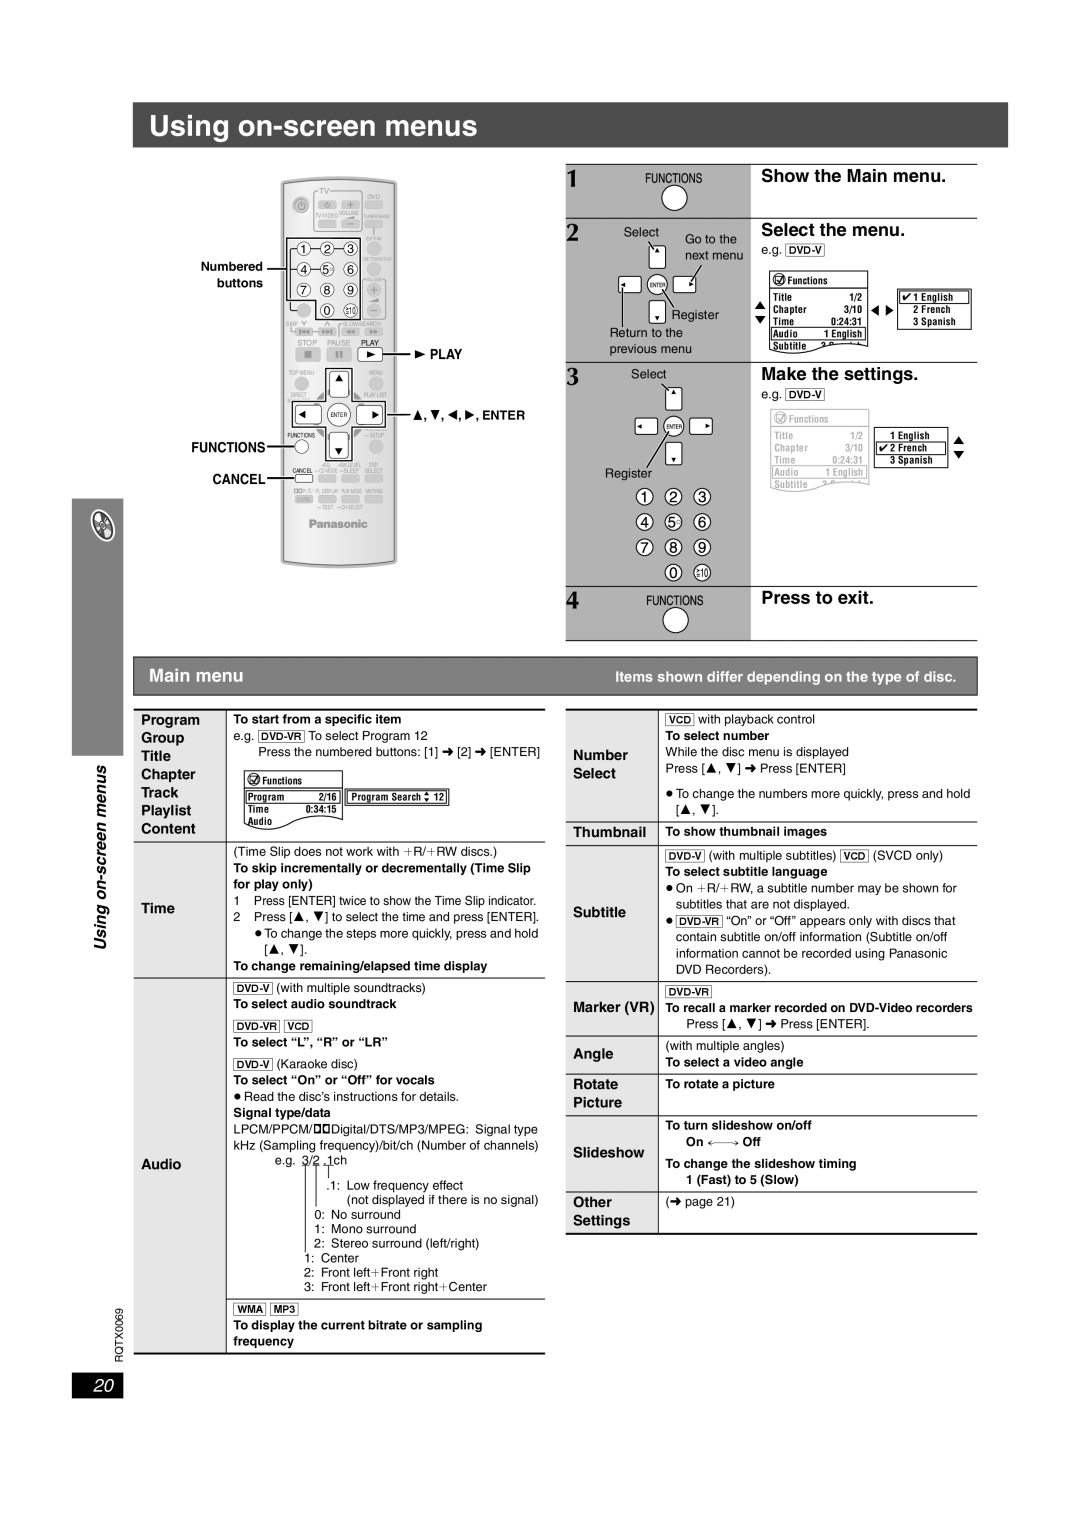 Panasonic SC-PT650 Using on-screenmenus, Press to exit, Main menu, Program, Group, Title, Chapter, Track, Playlist, Time 